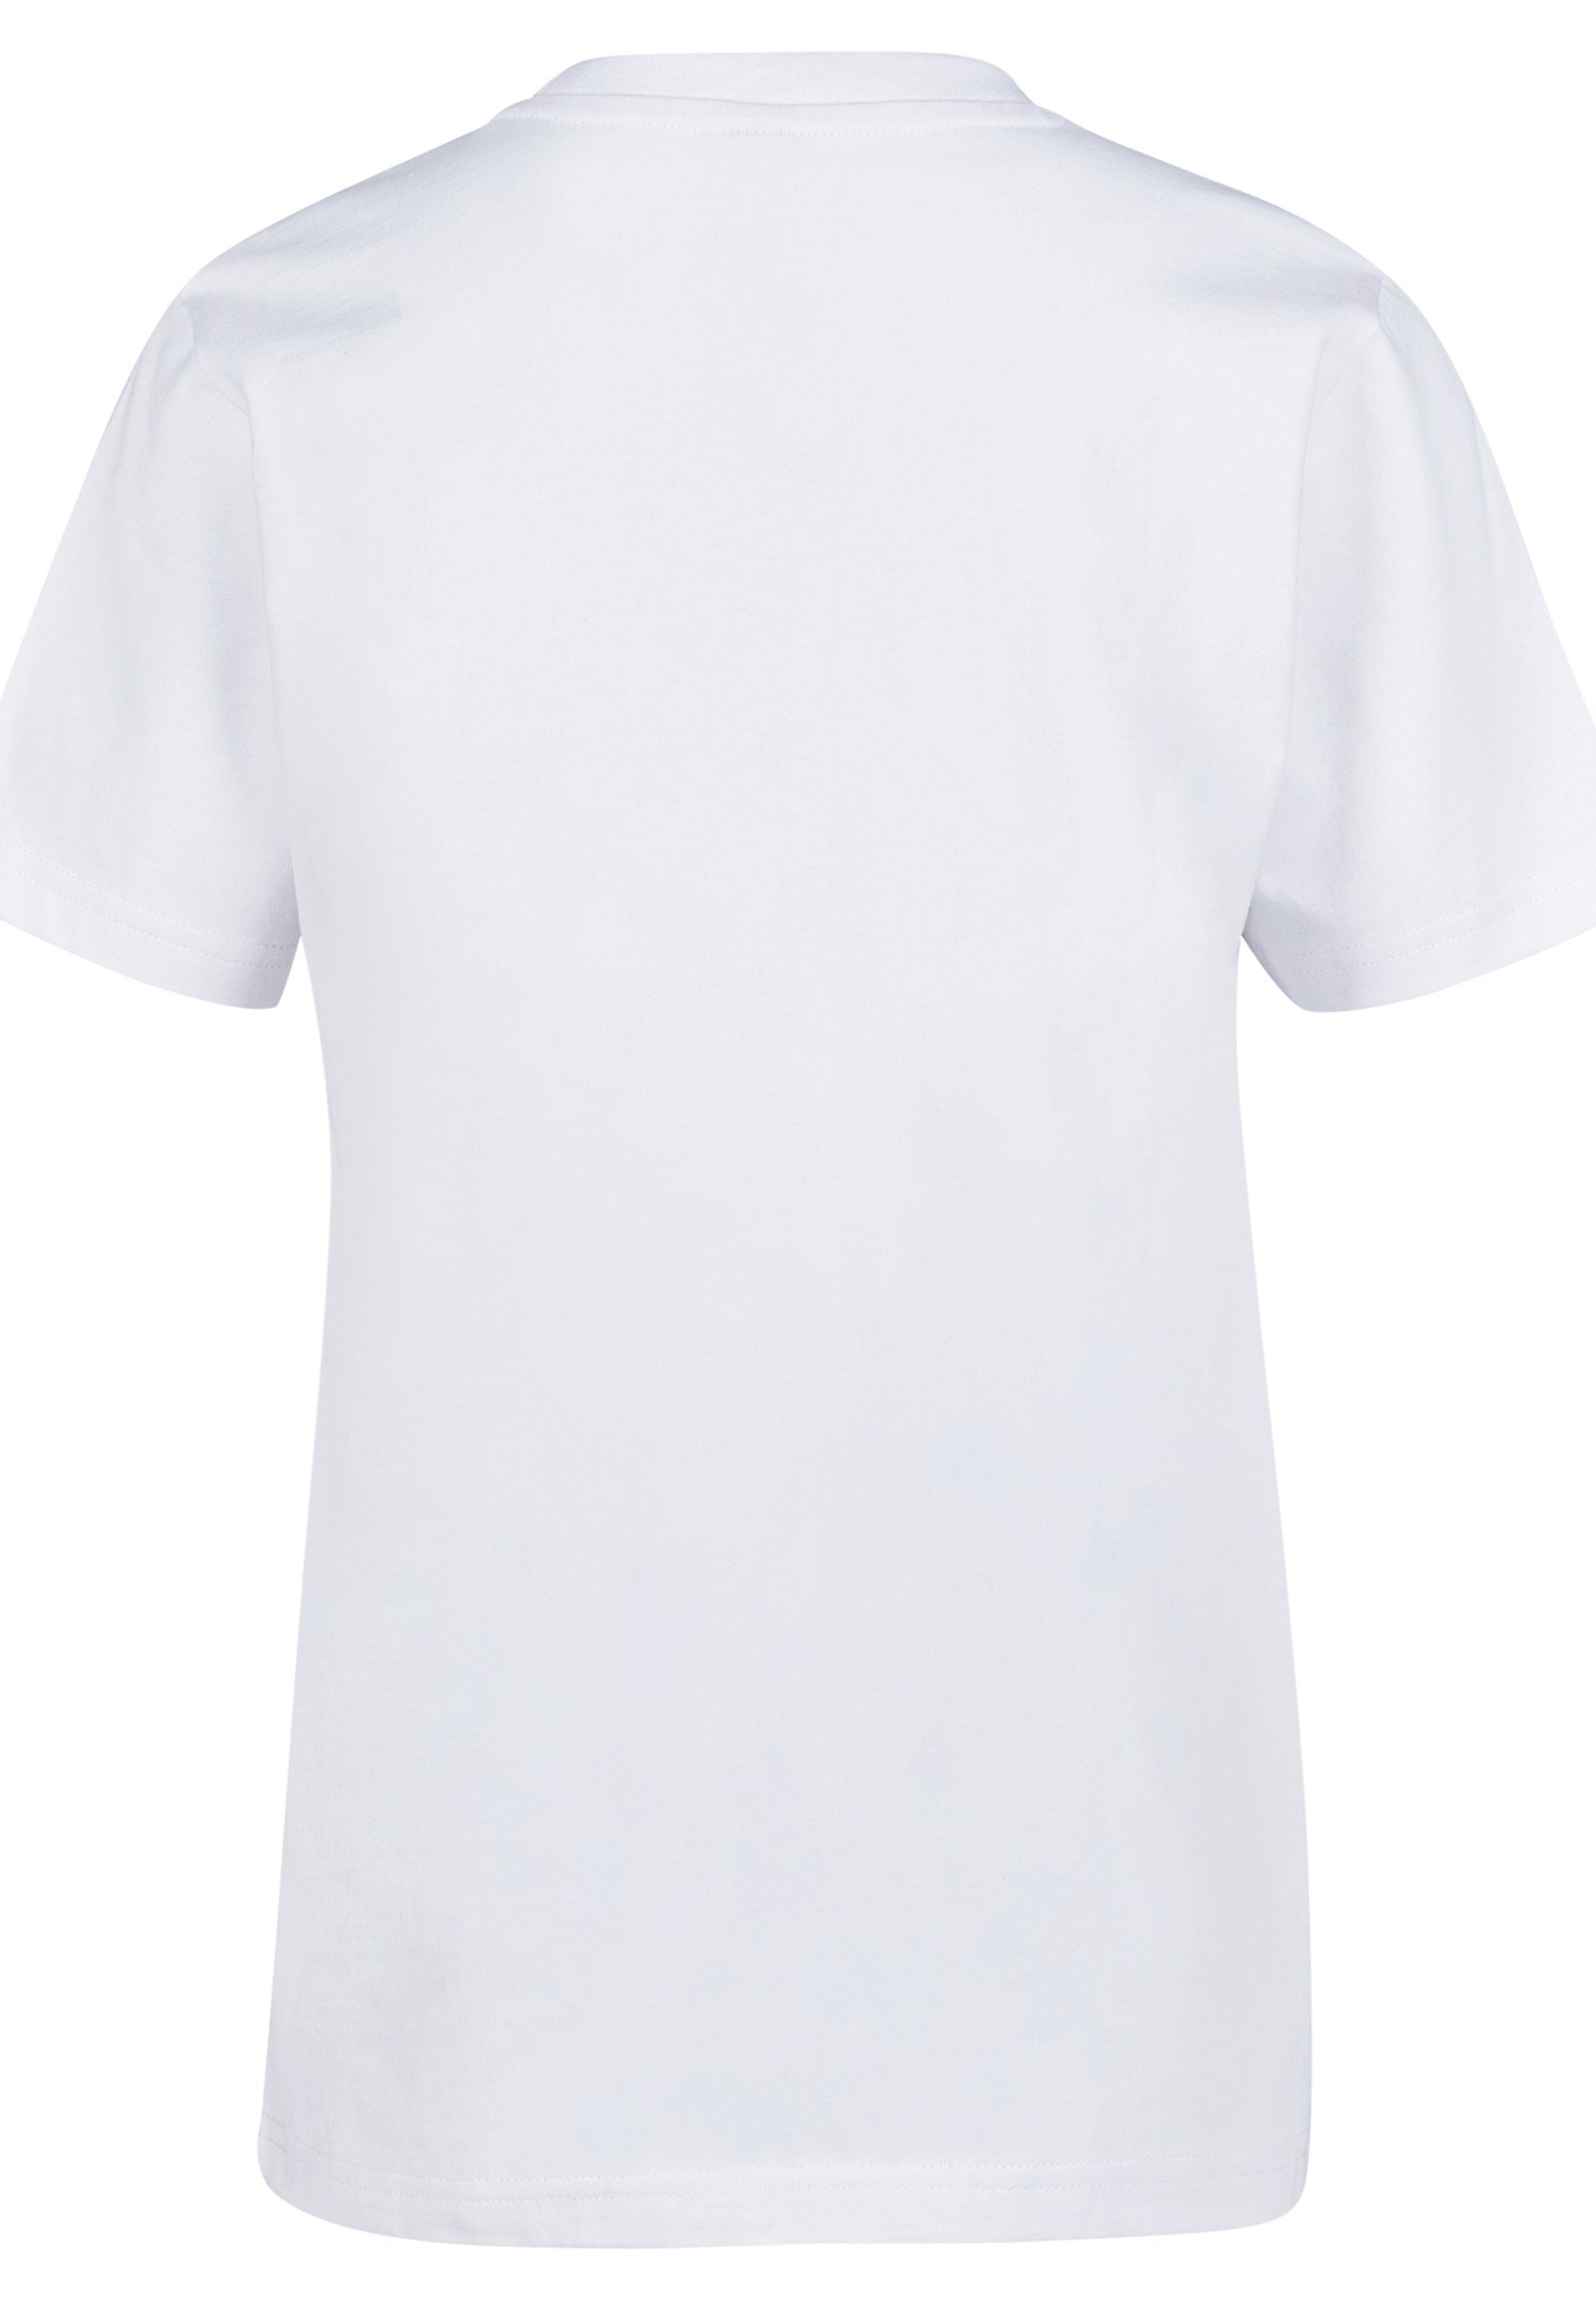 F4NT4STIC T-Shirt Bowie Unisex Bolt David Lightning Kinder,Premium Merch,Jungen,Mädchen,Bandshirt Aladdin Sane